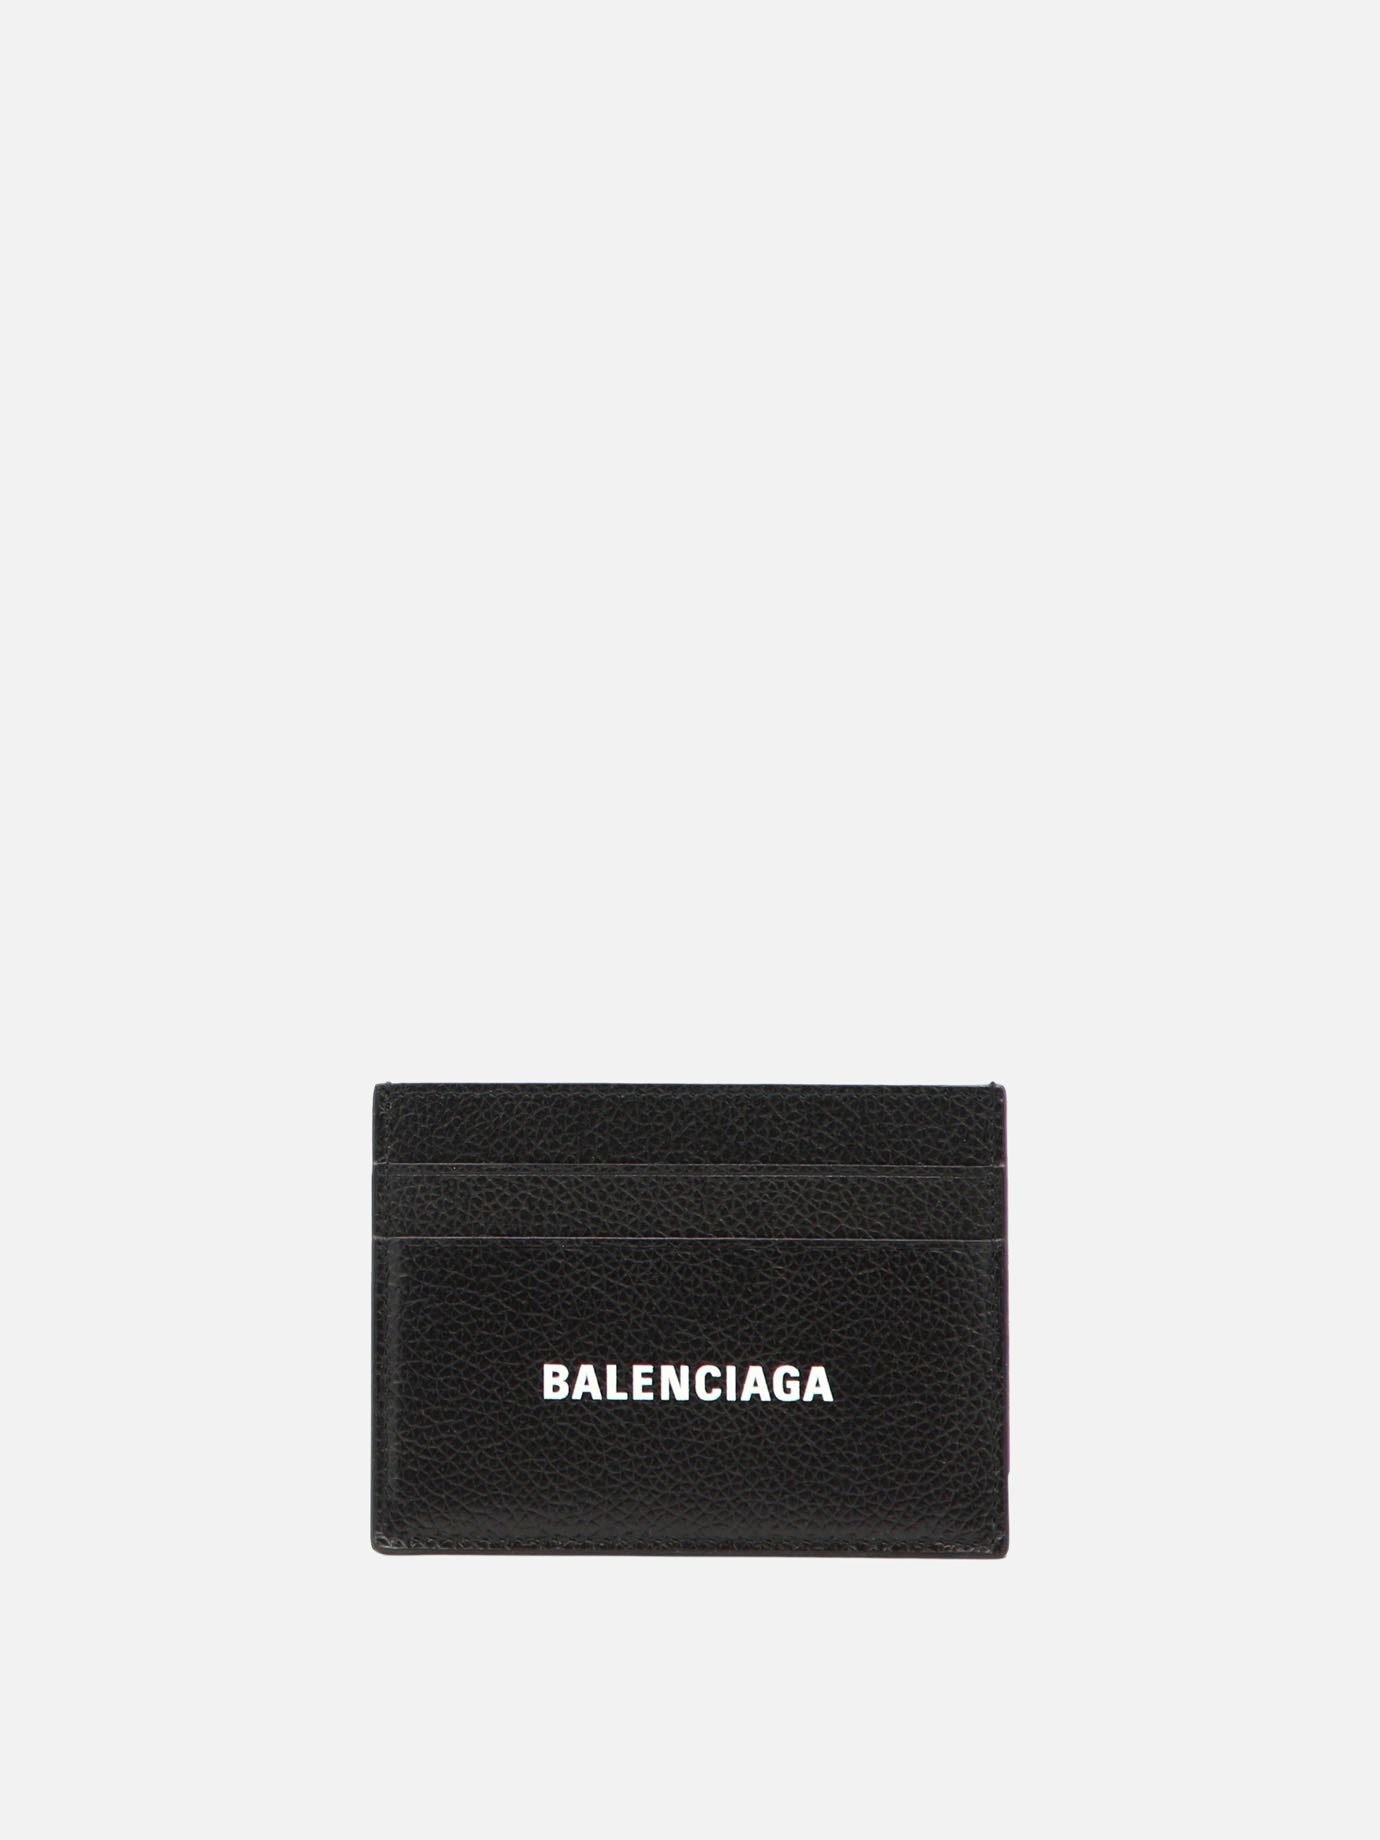  Cash  card holderby Balenciaga - 3